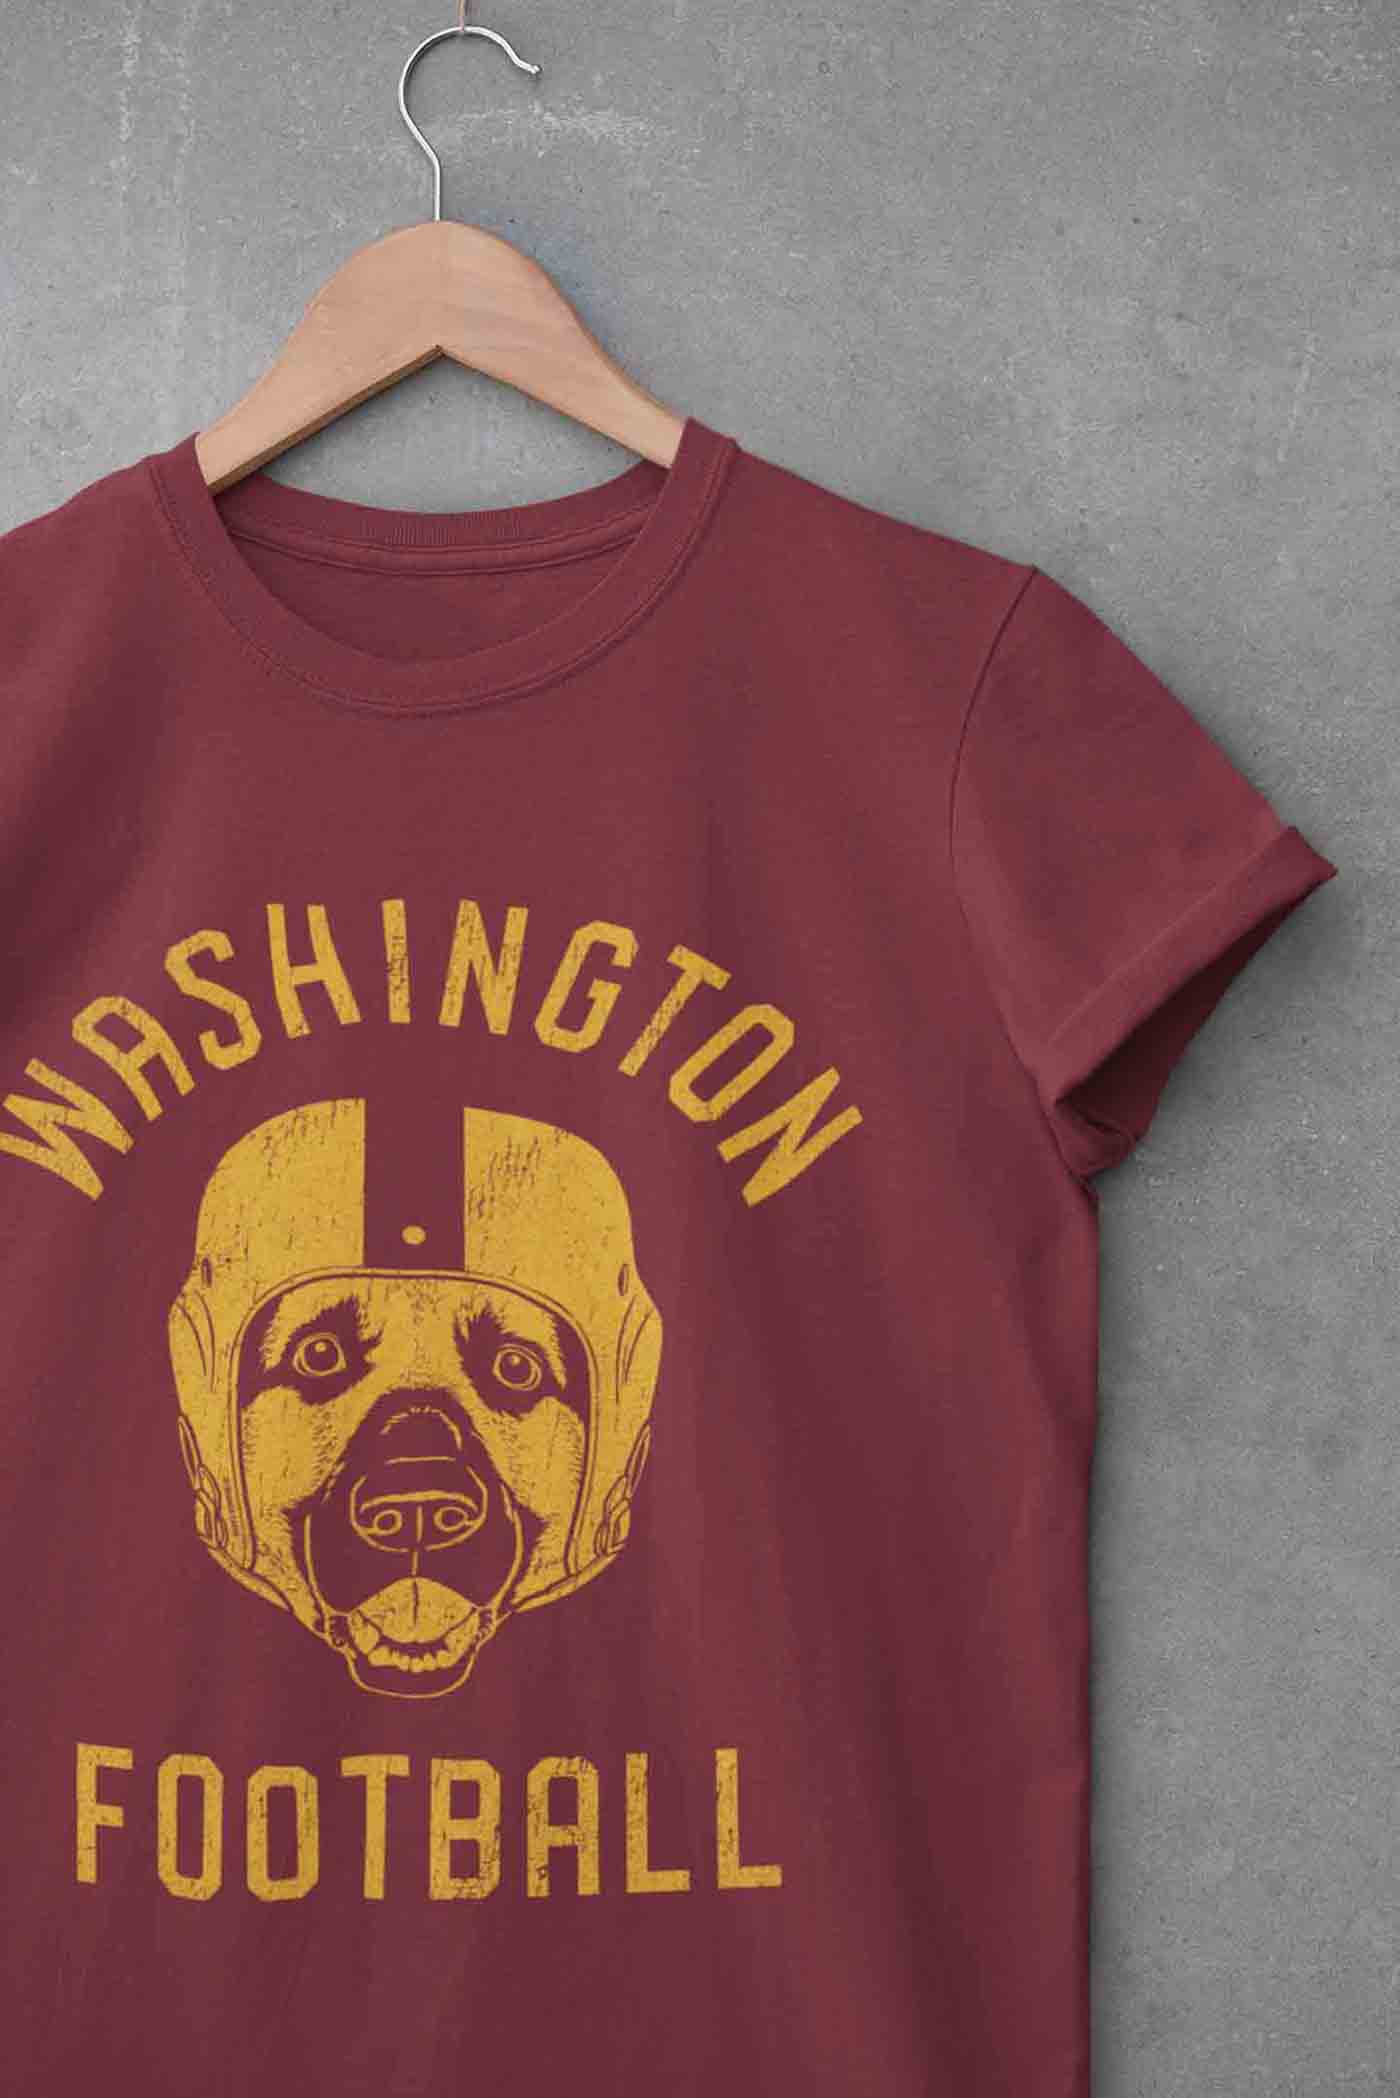 Washington Football German Shepherd T-Shirt